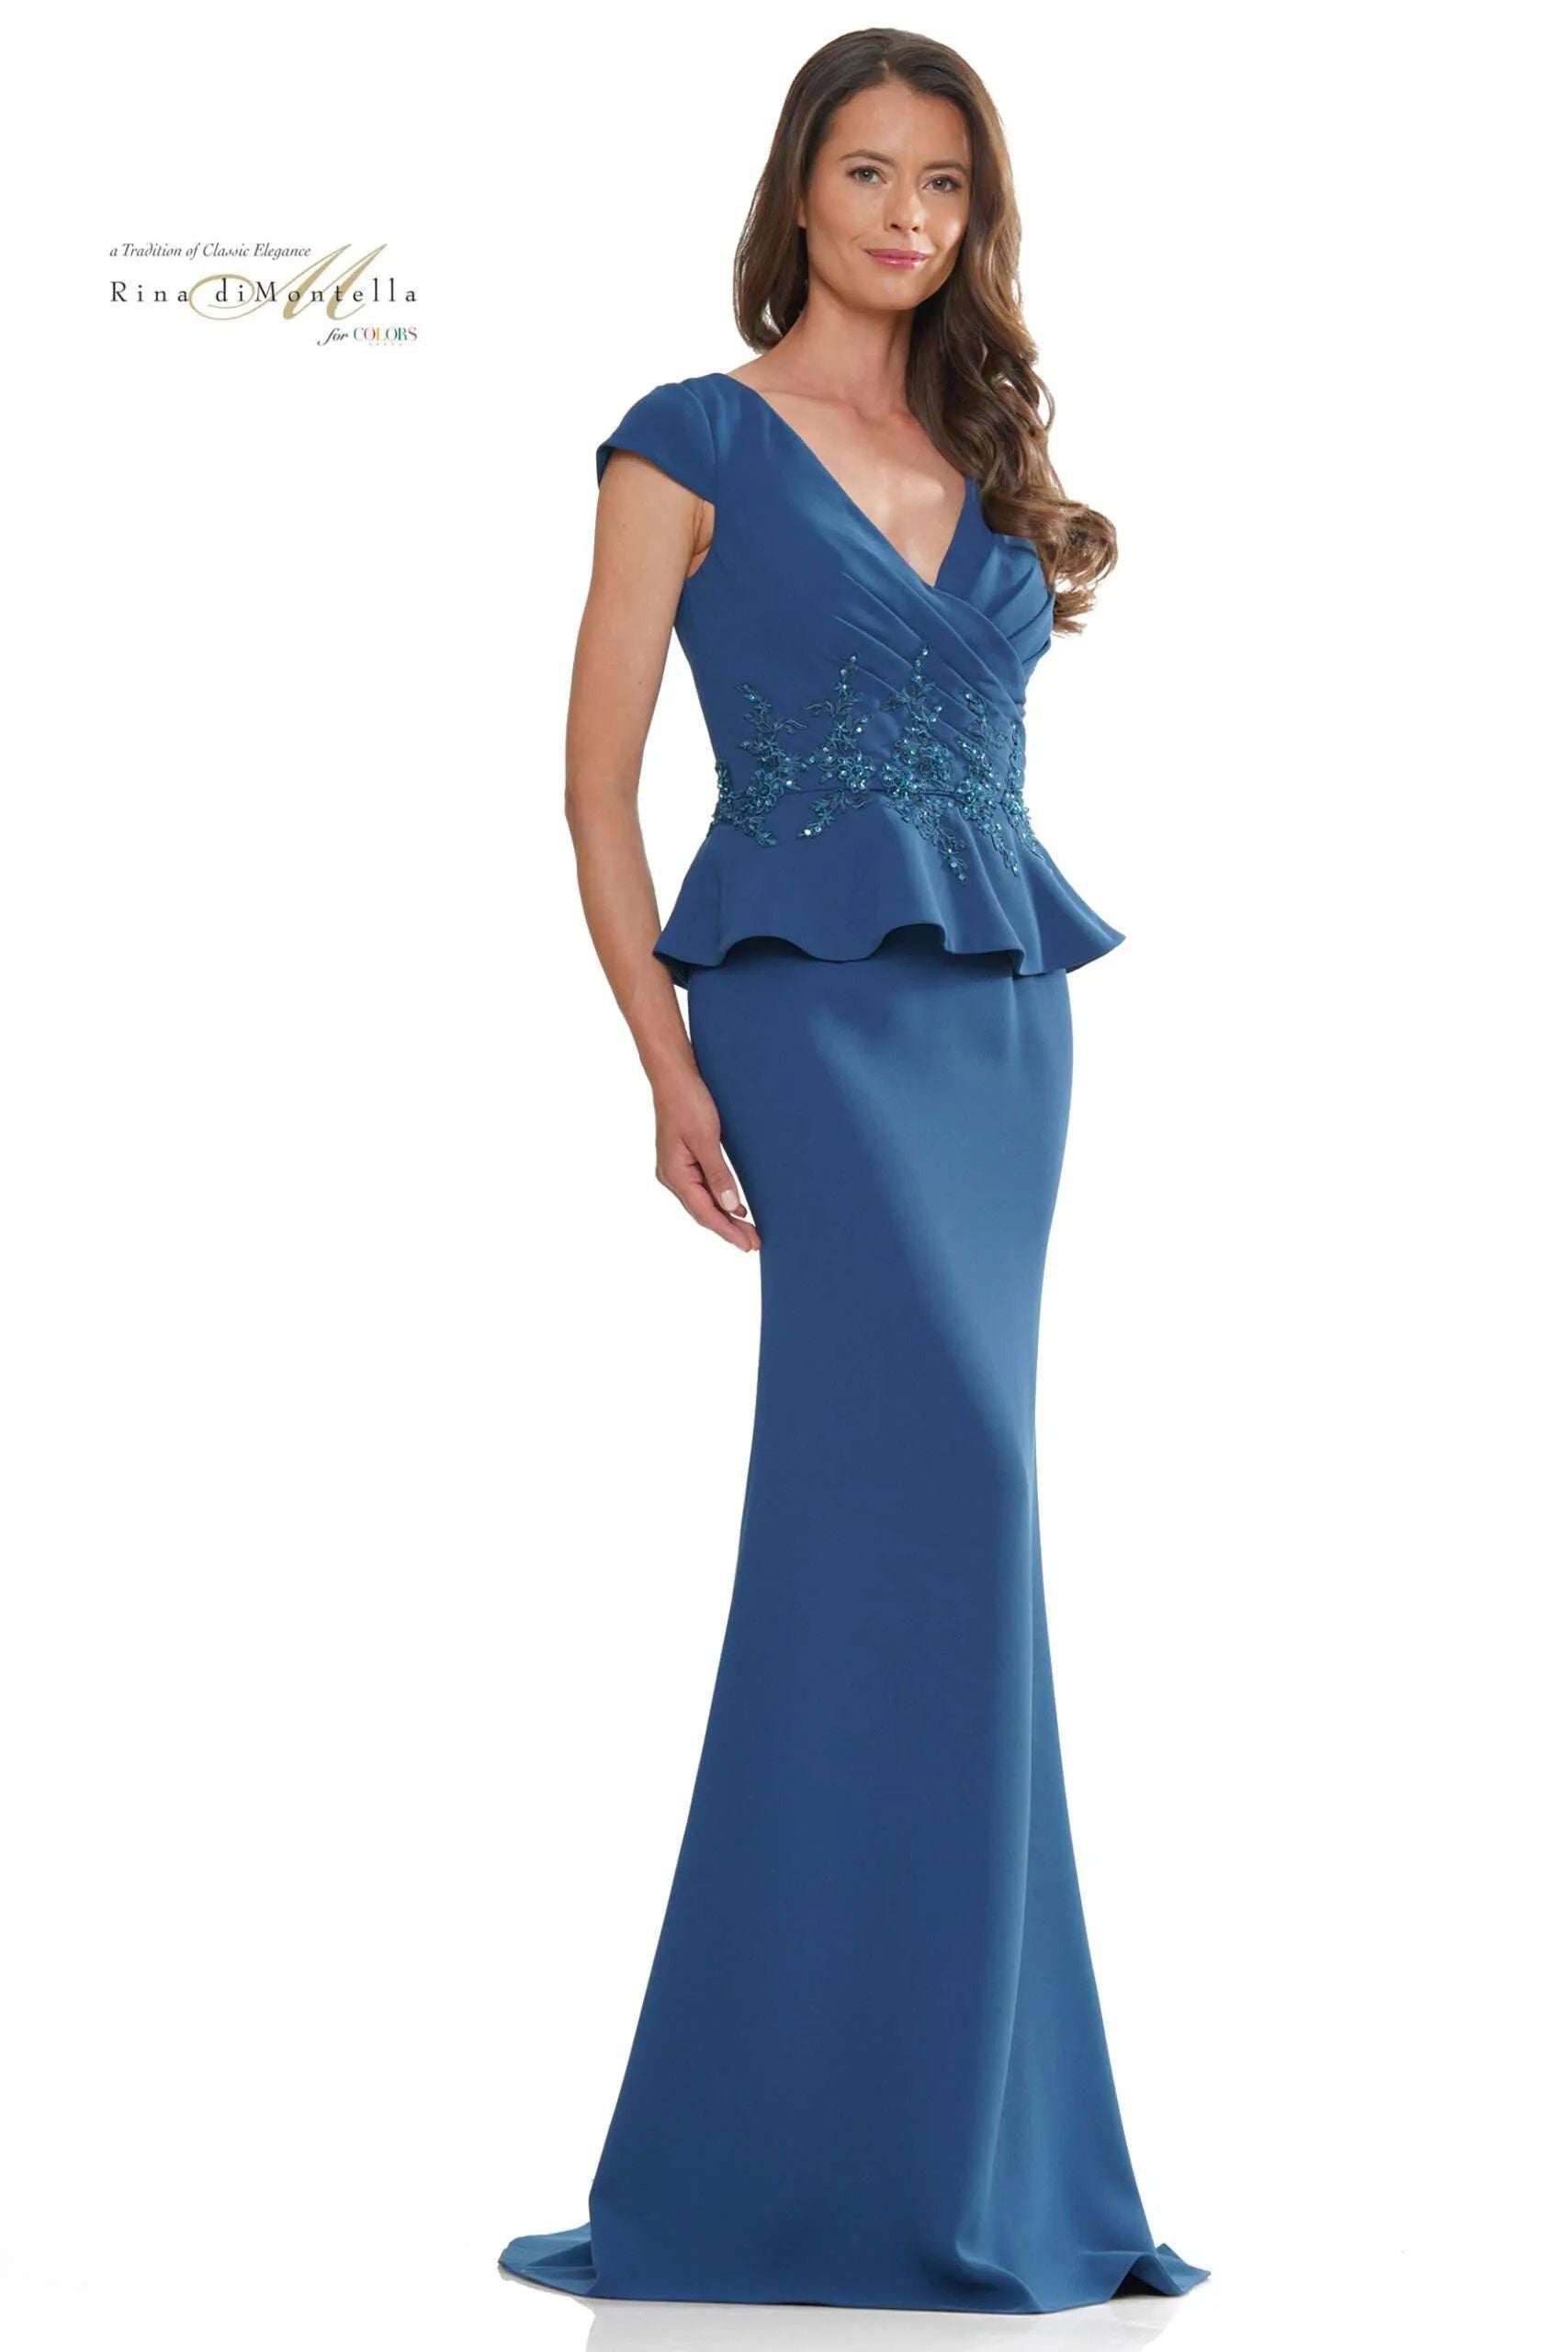 Rina Di Montella -RD2971-1 Wrapped Bodice Lace Applique Waist Flare Gown